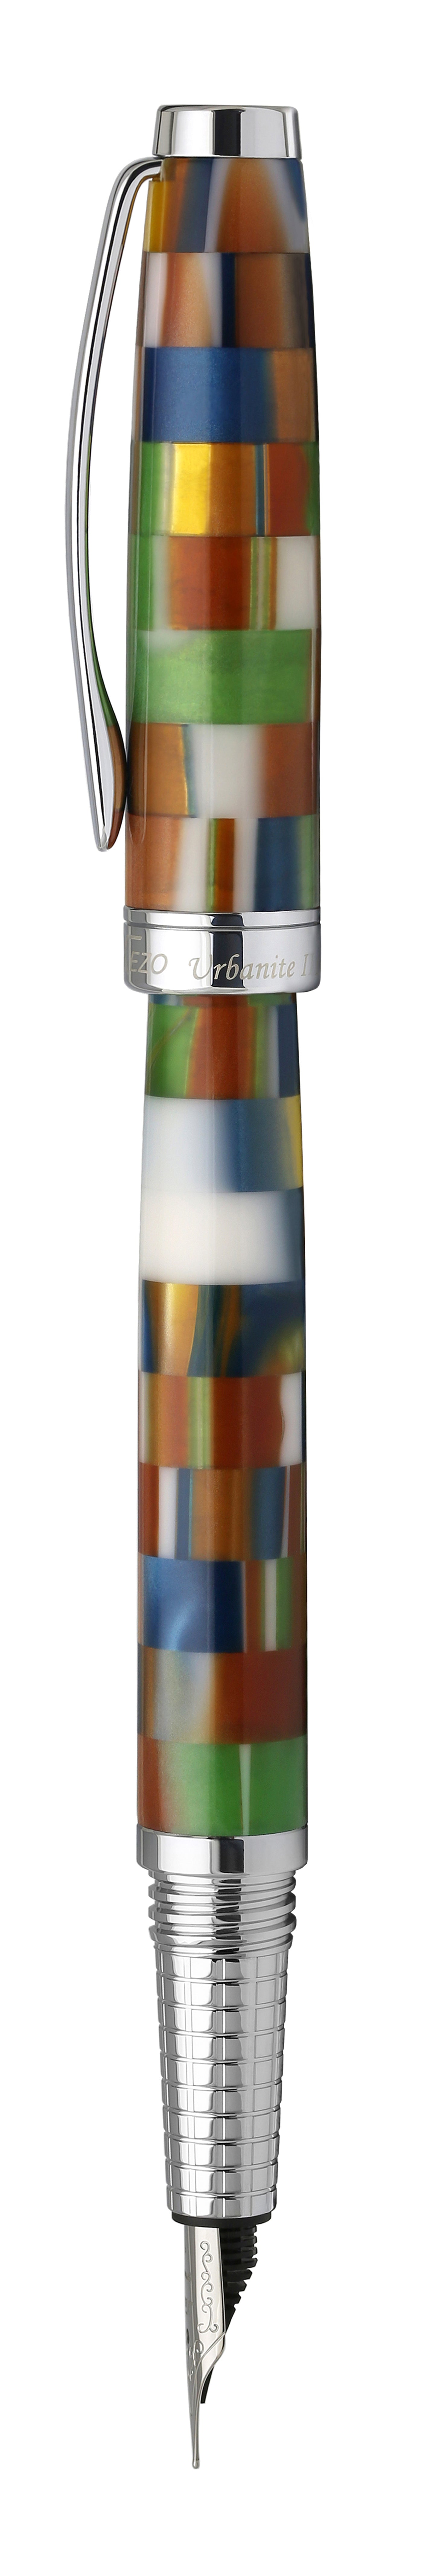 Xezo - Side view of the Urbanite II Jazz F fountain pen